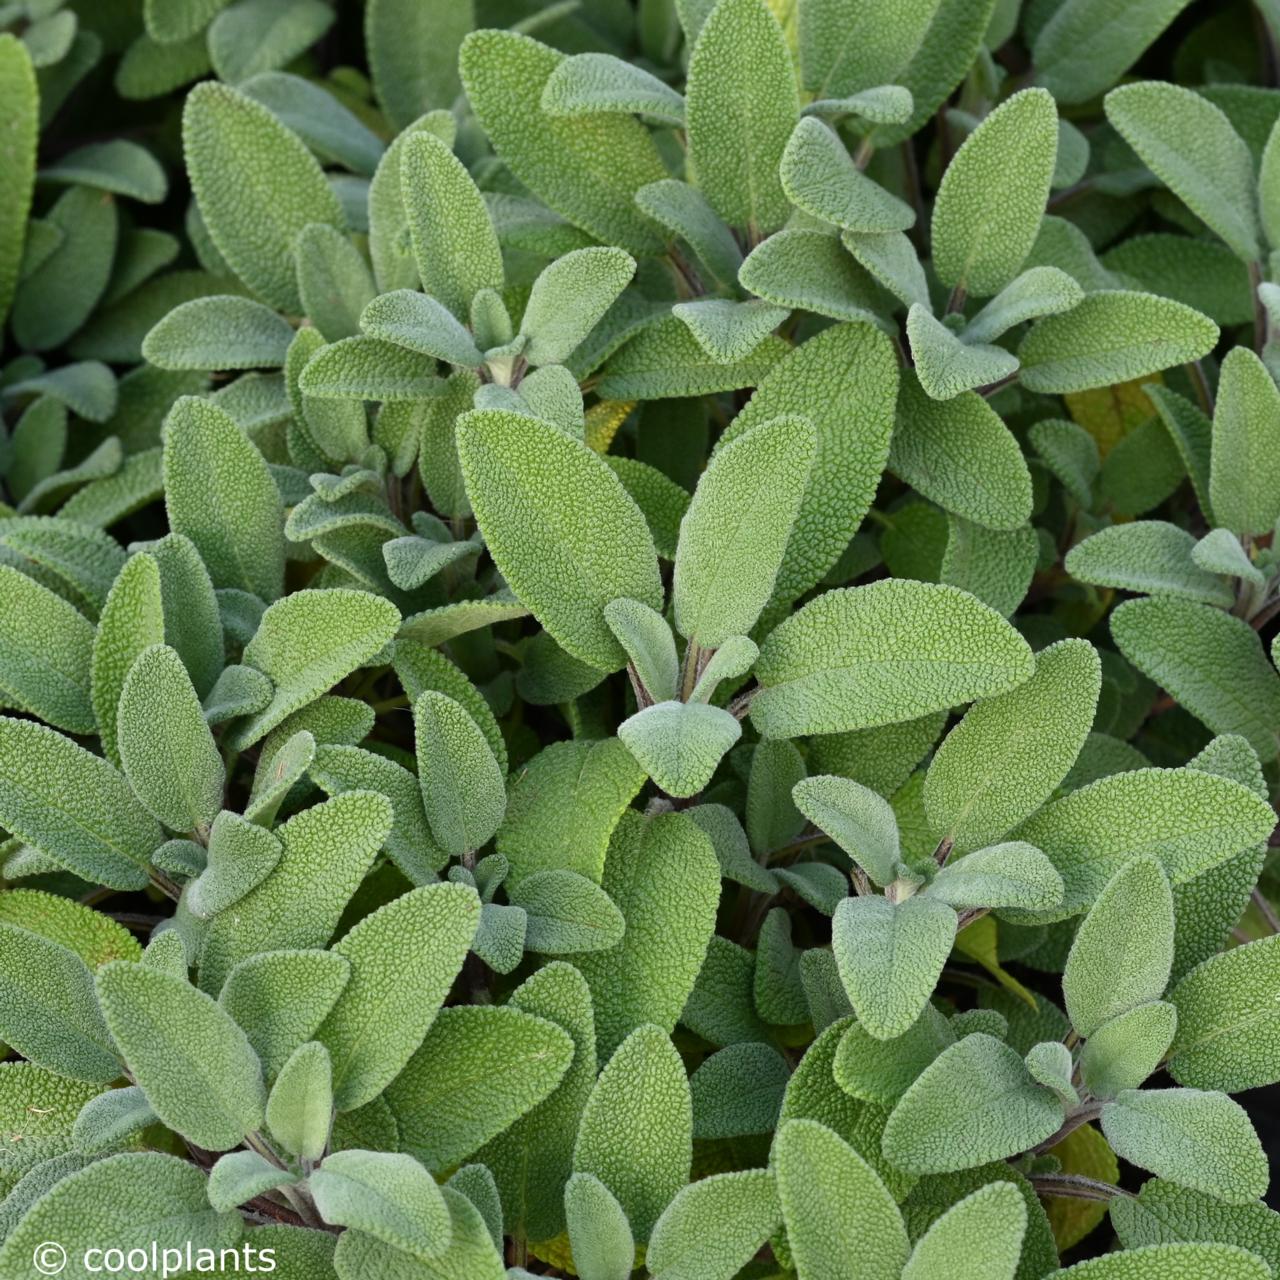 Salvia officinalis 'Growers'Friend' plant